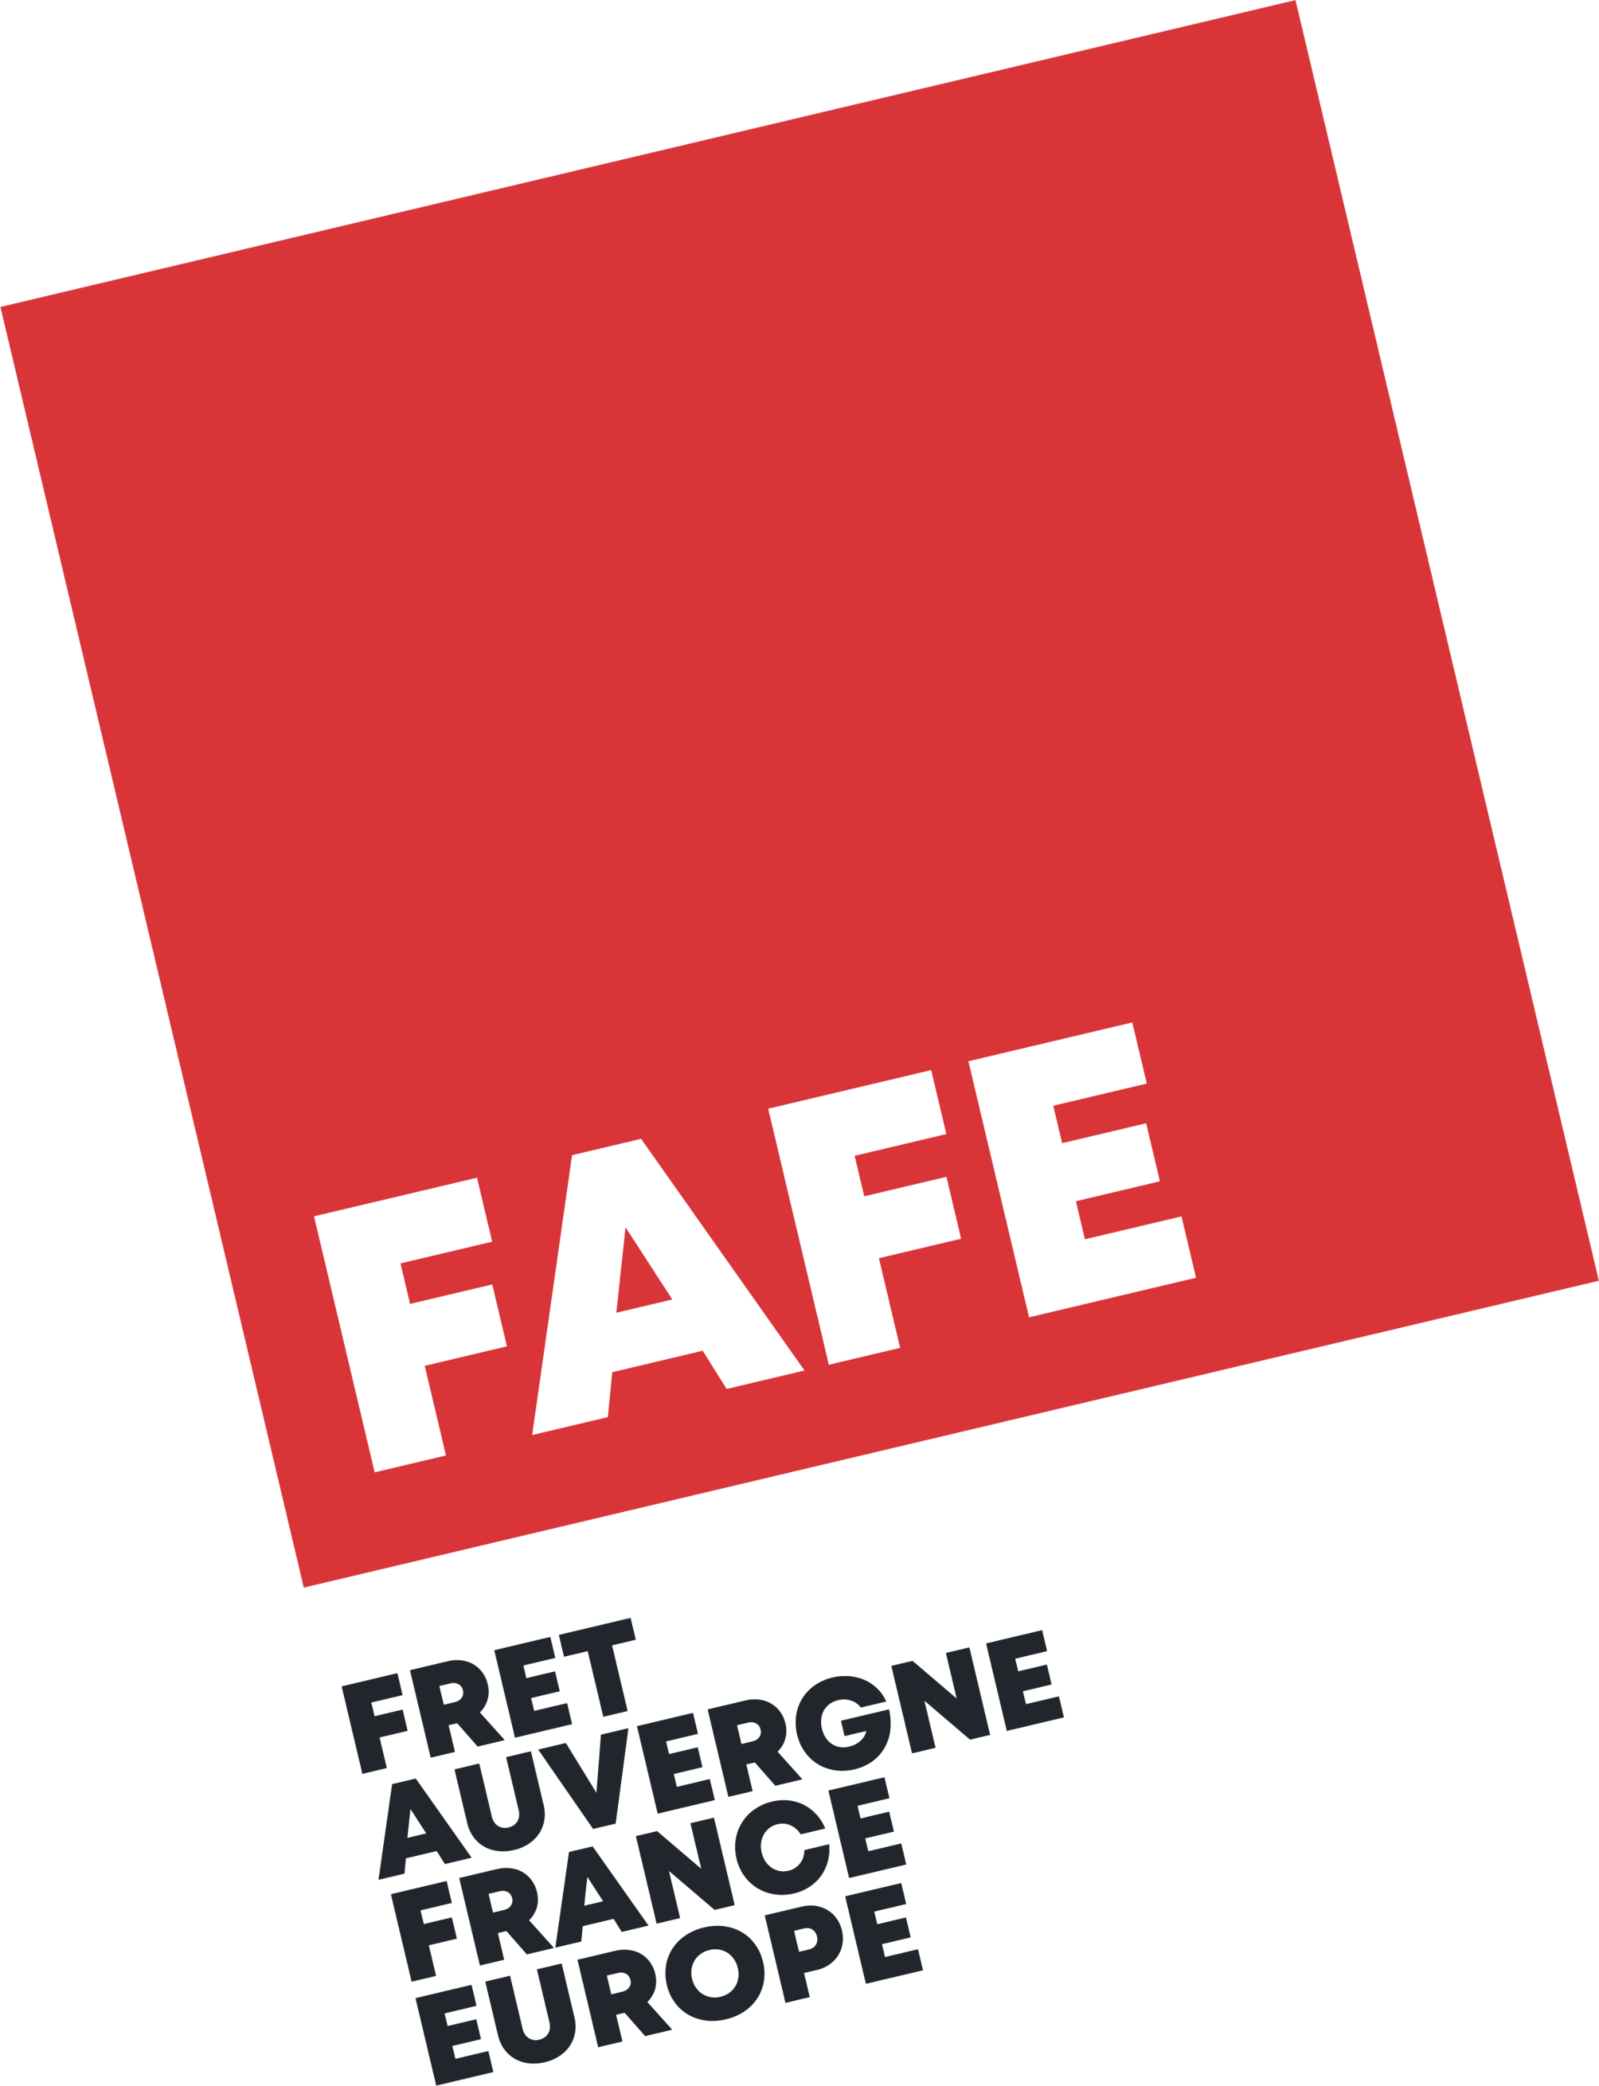 Logo FAFE Fret Auvergne France Europa